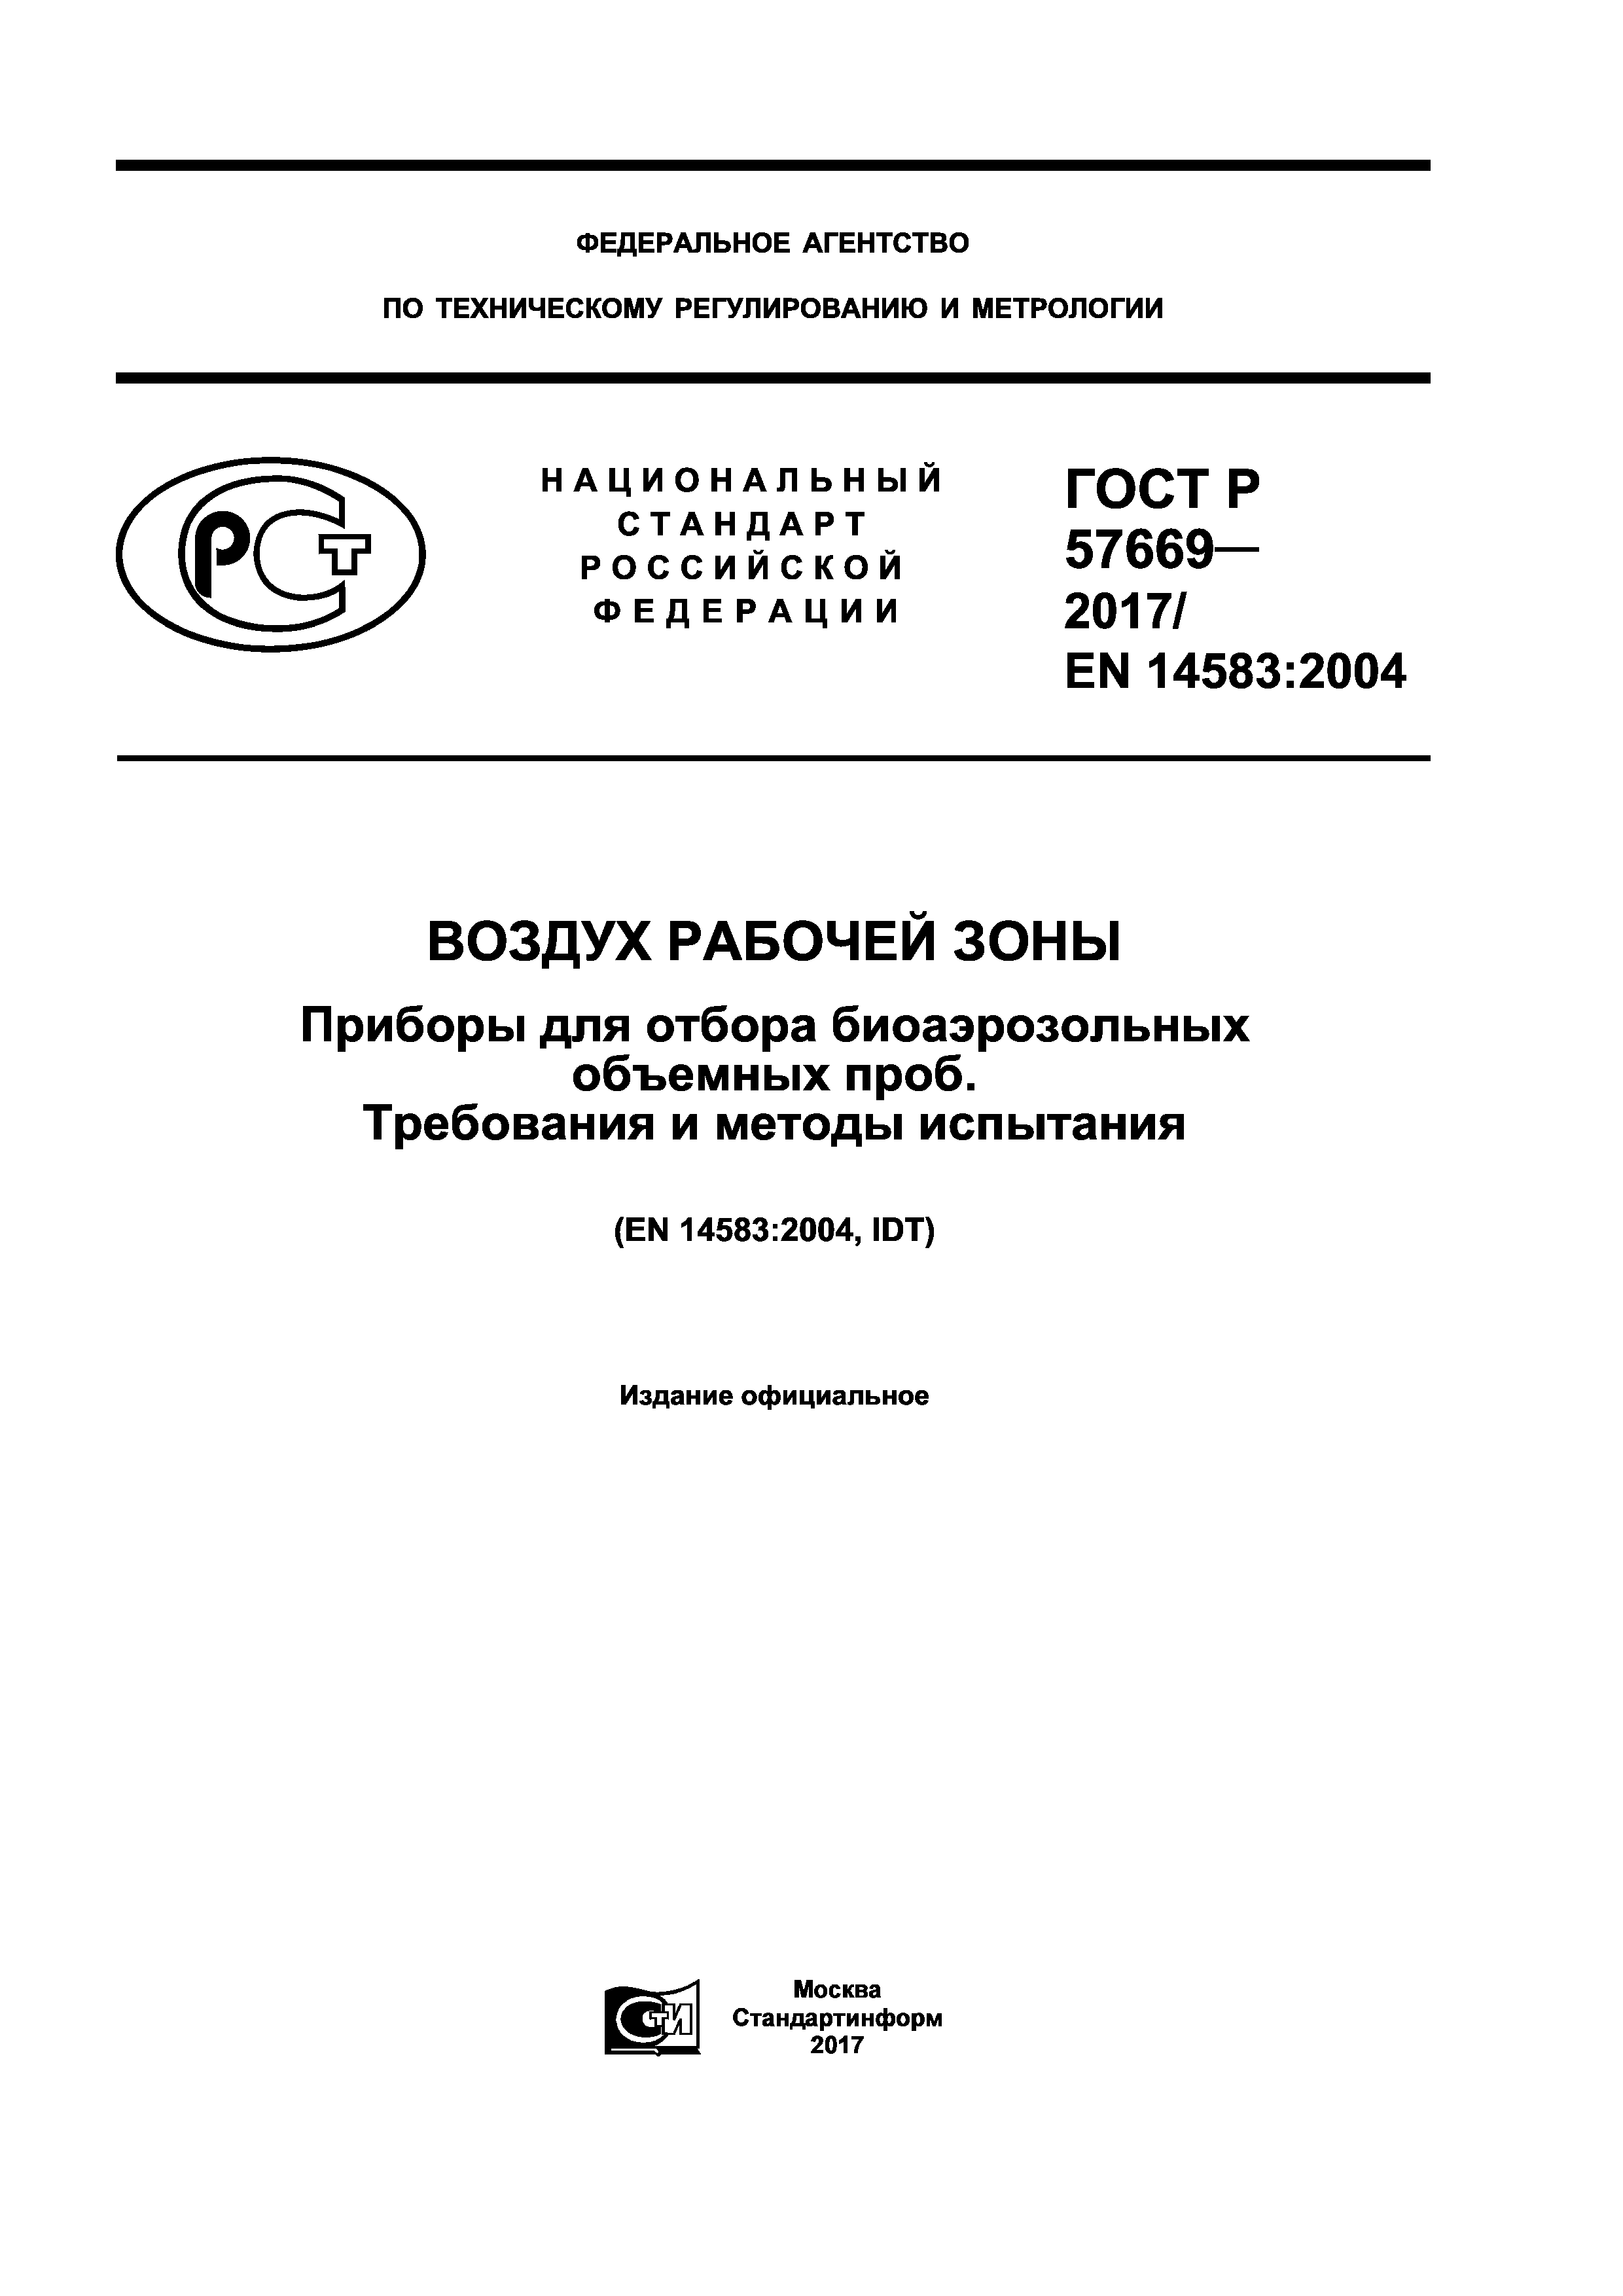 ГОСТ Р 57669-2017